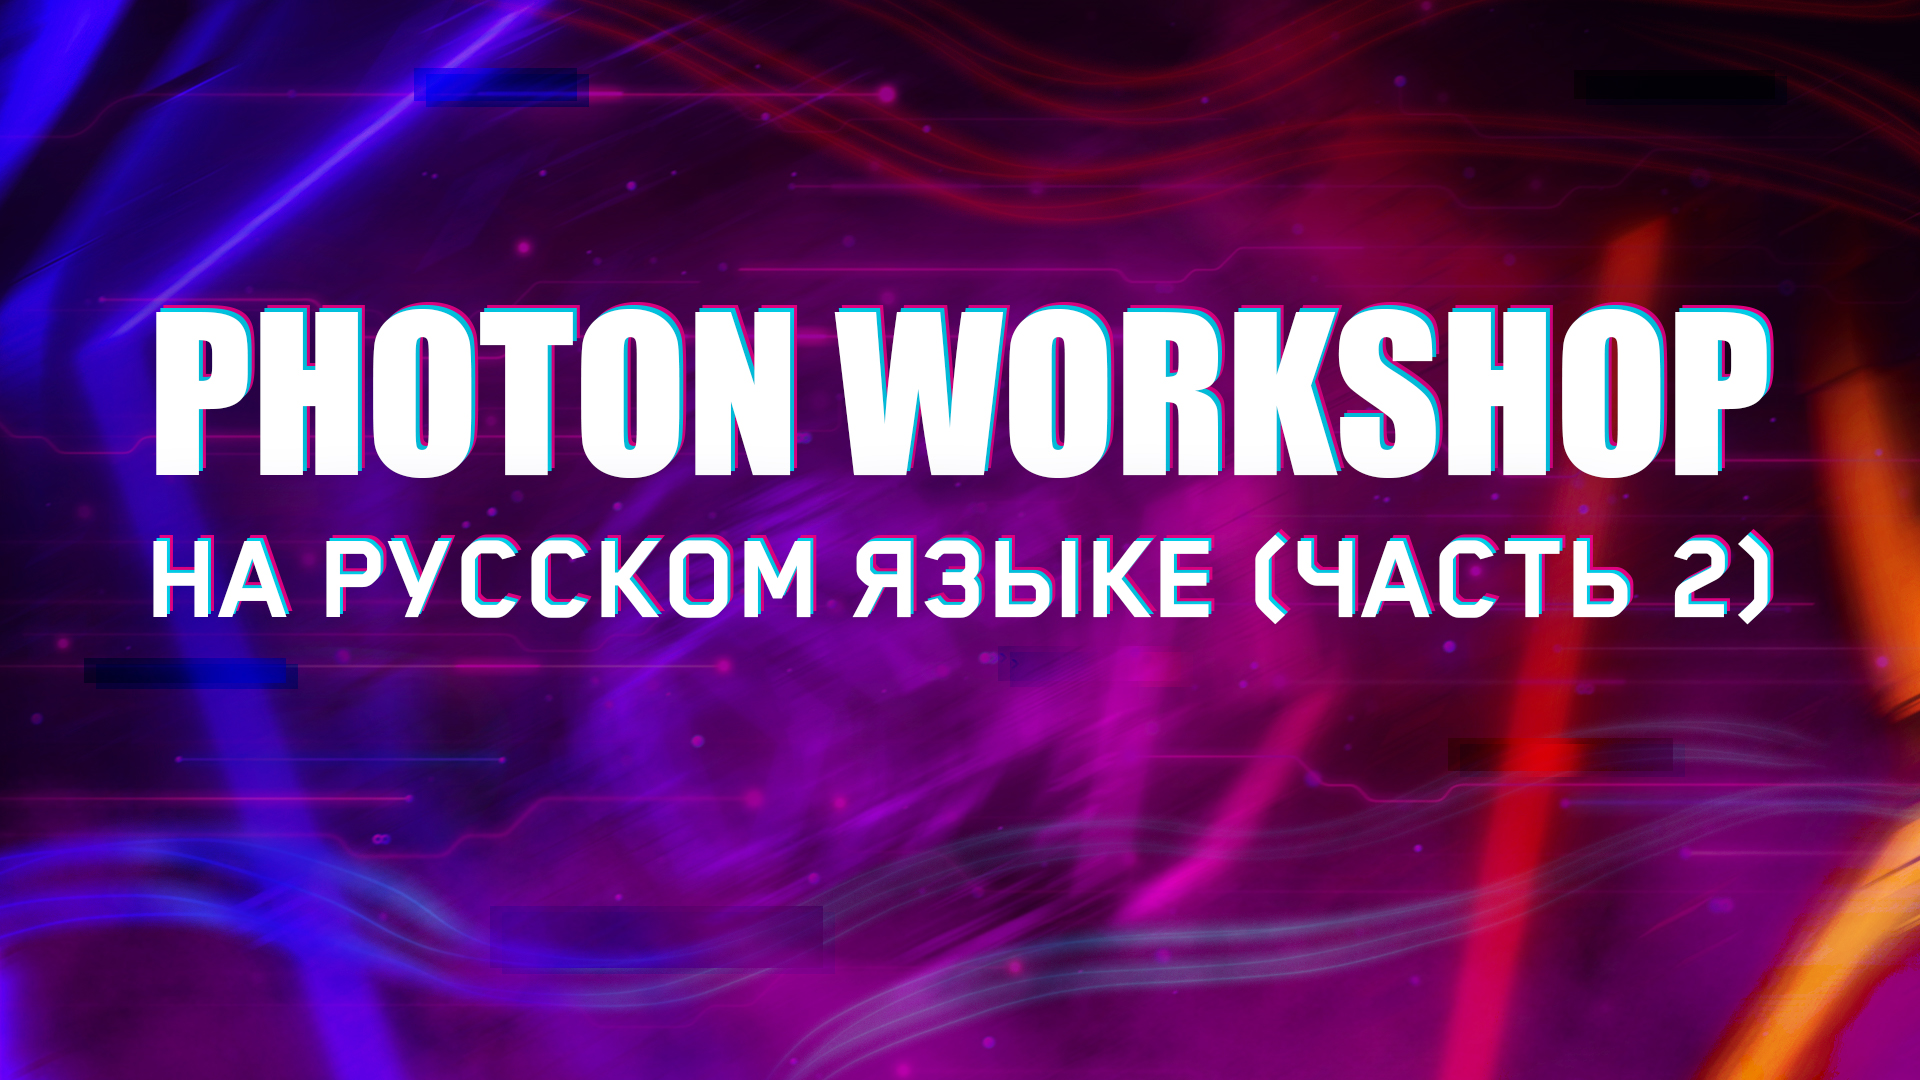 Photon workshop. Photon Workshop 3. Как пользоваться Photon Workshop 64.